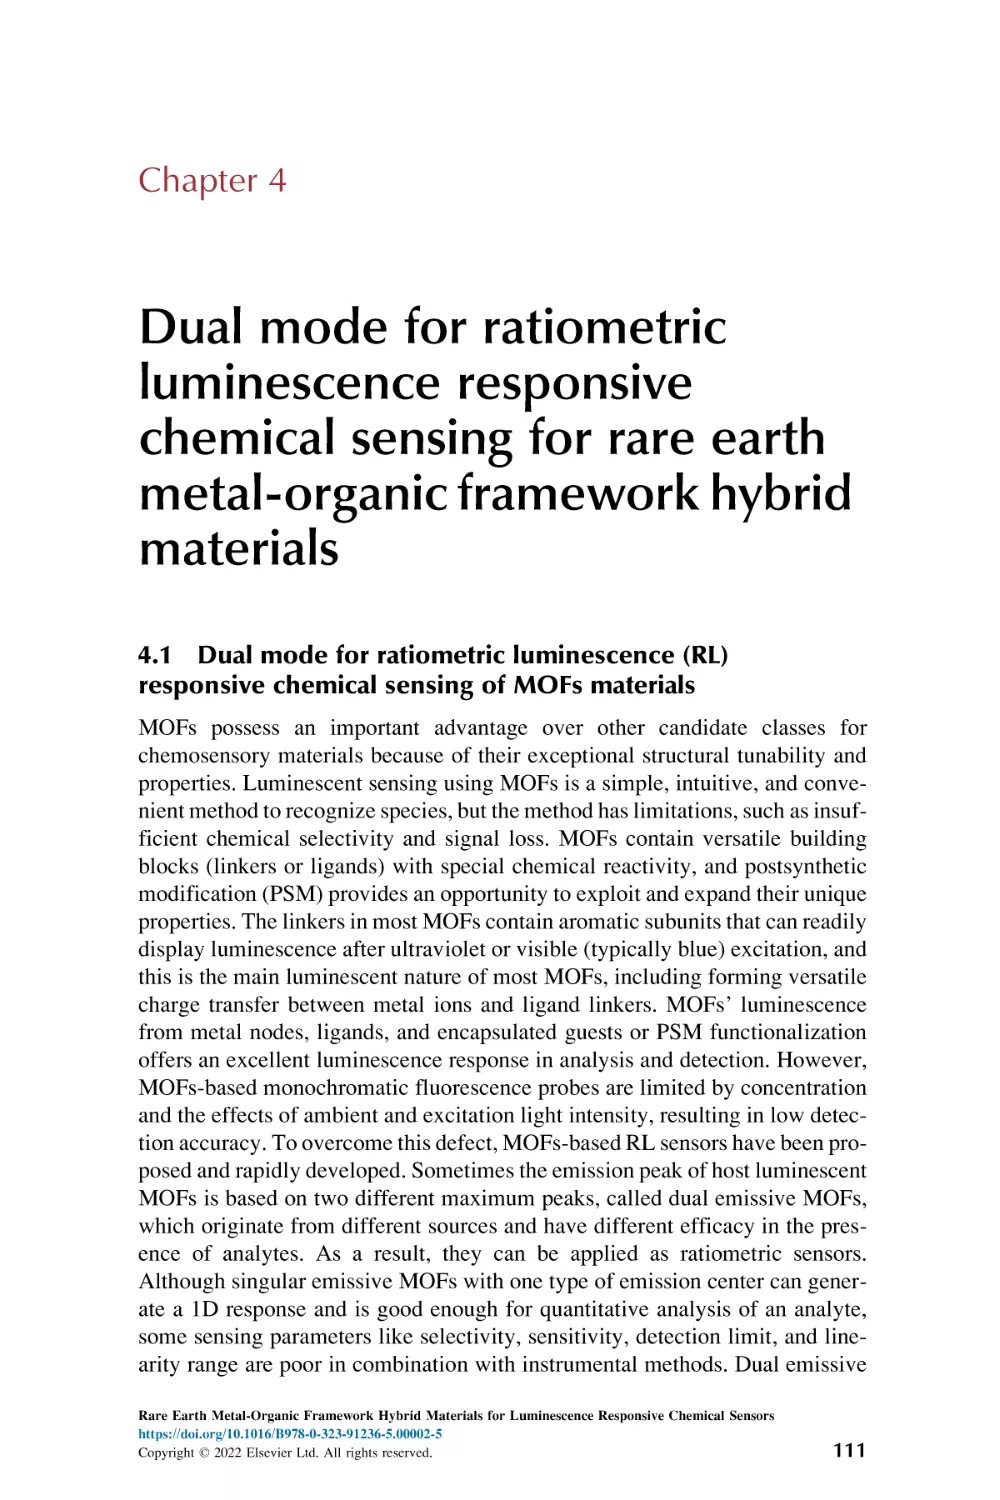 Chapter 4
4.1. Dual mode for ratiometric luminescence (RL) responsive chemical sensing of MOFs materials